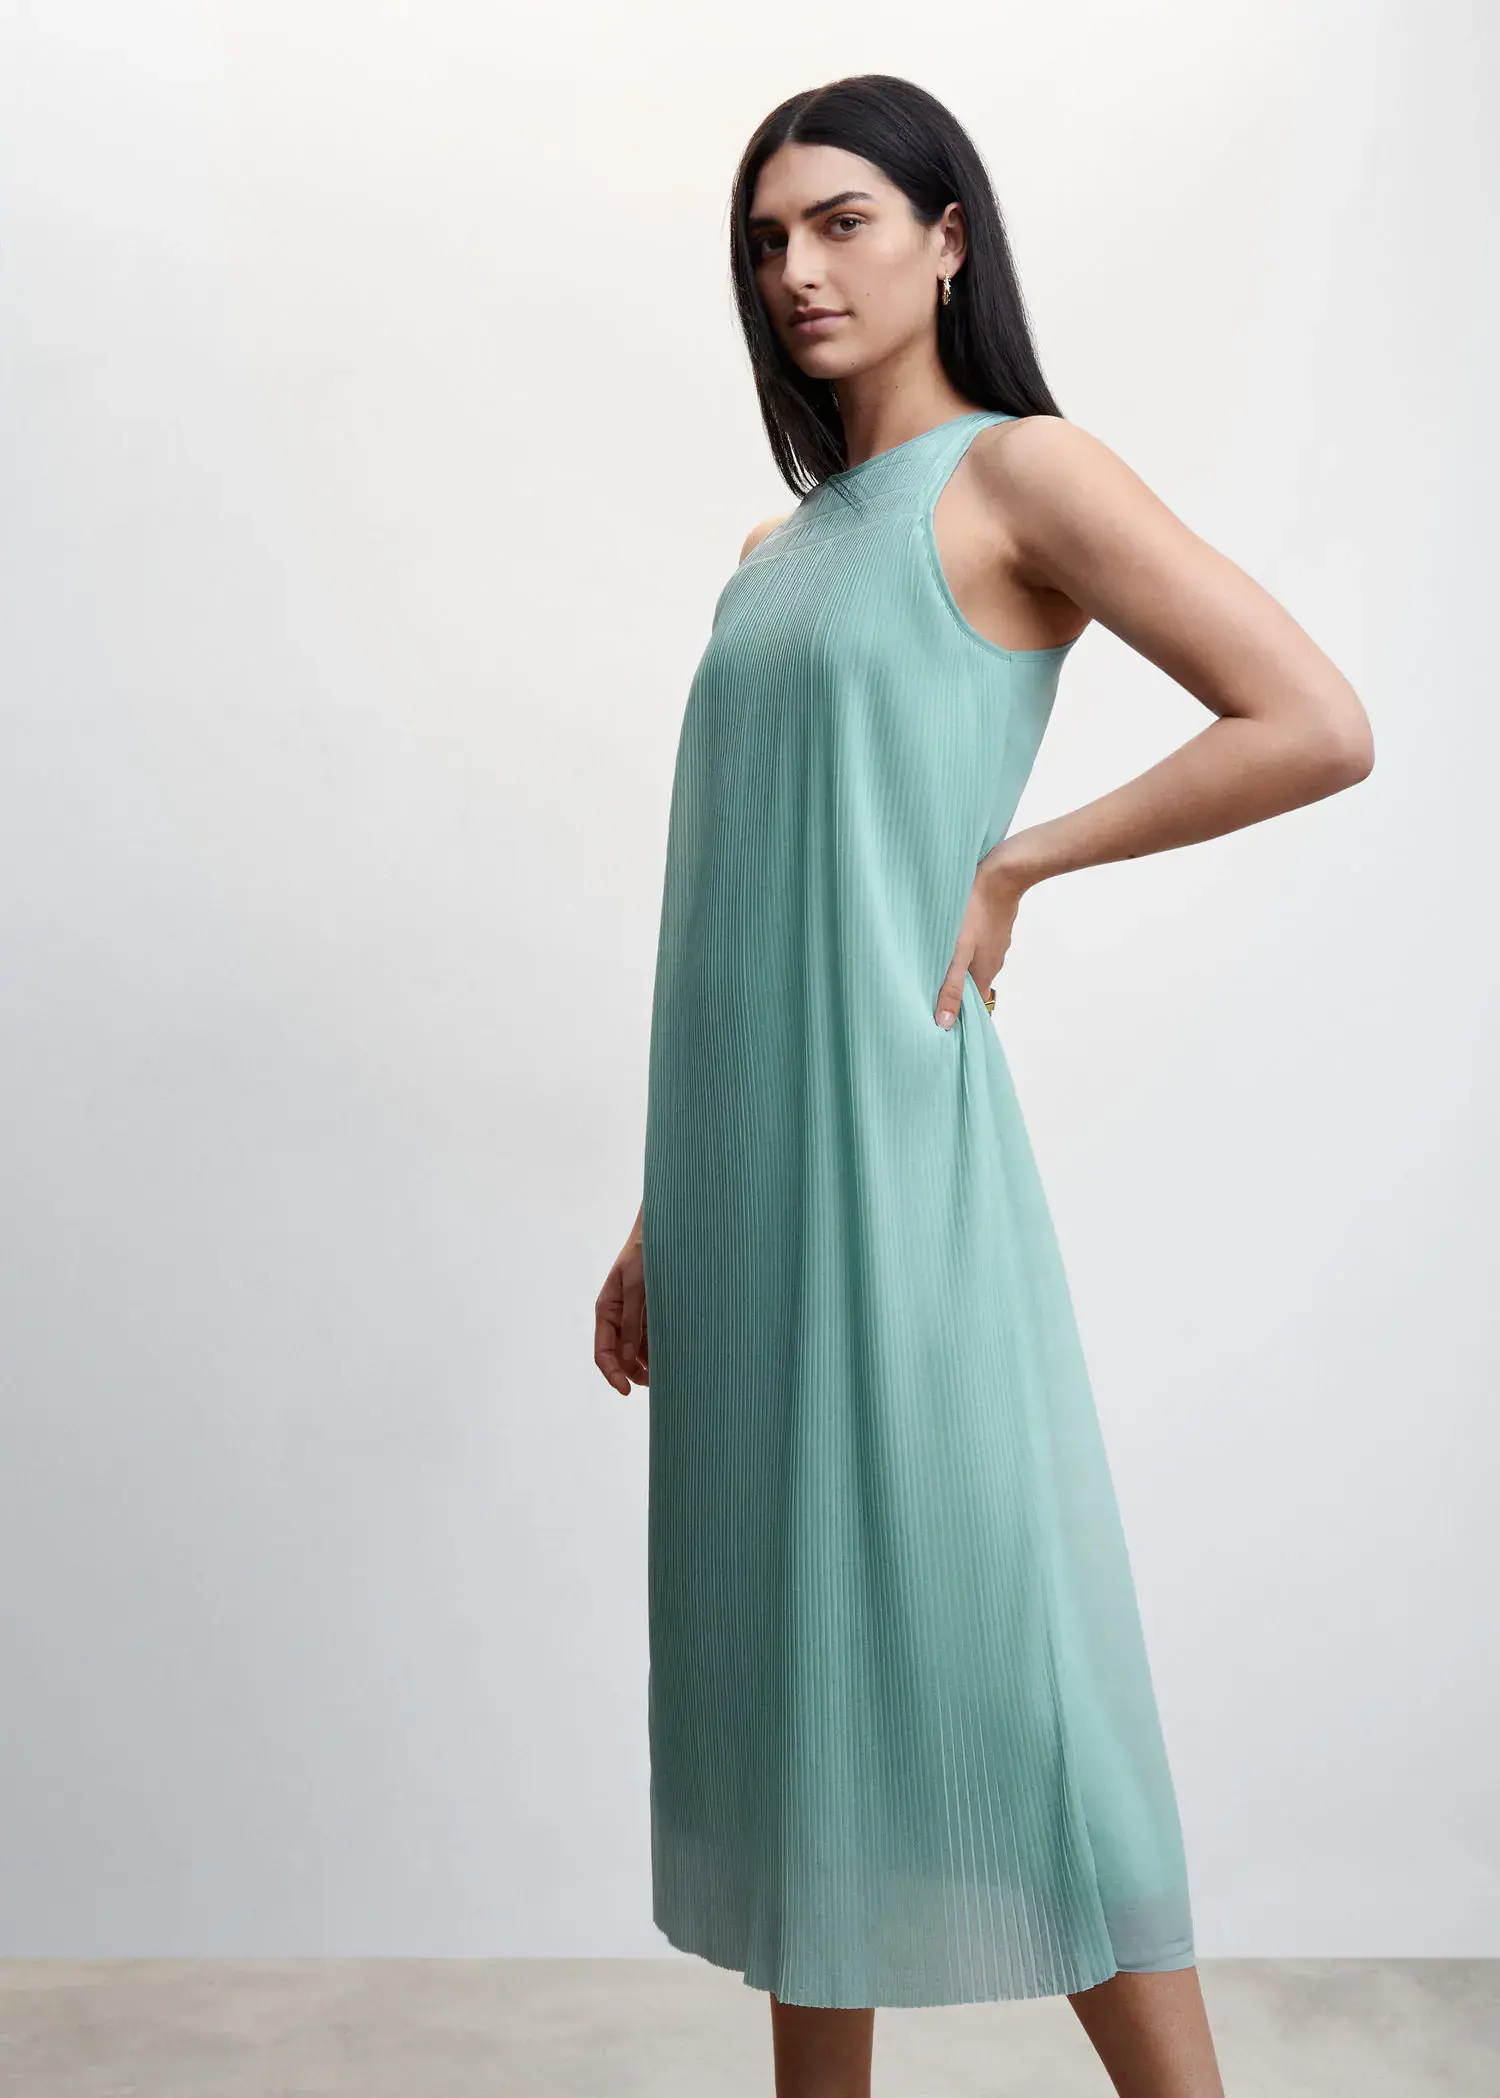 Mango Textured shift dress. a woman wearing a long blue dress standing next to a white wall. 